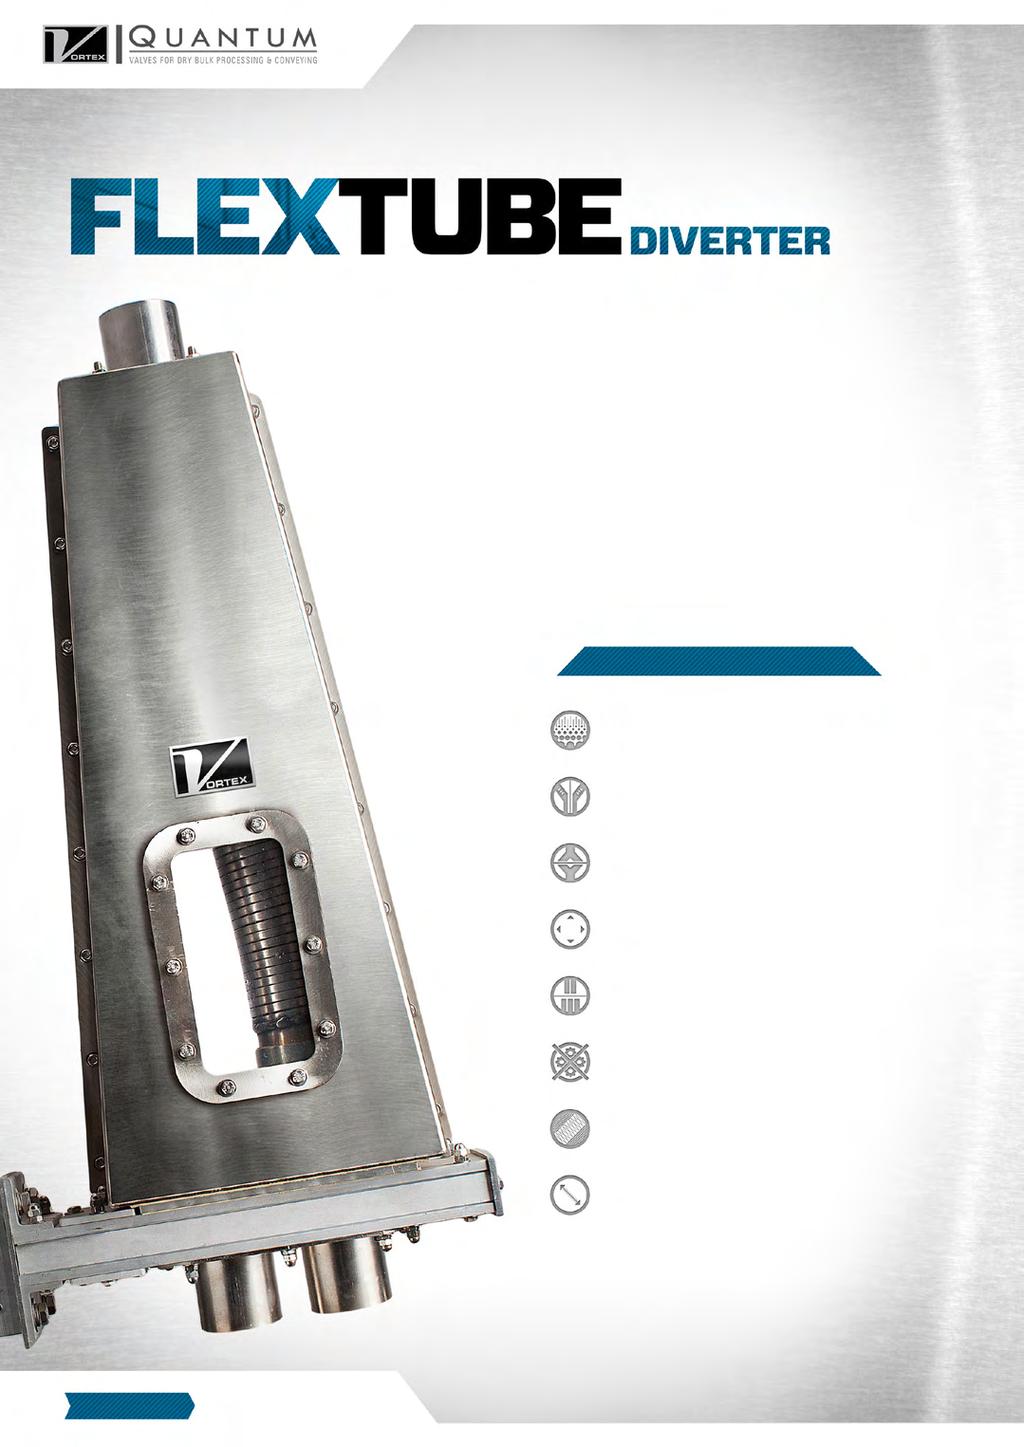 The unique design of the Vortex Flex Tube Diverter eliminates material cross contamination through a positive seal across the closed port.